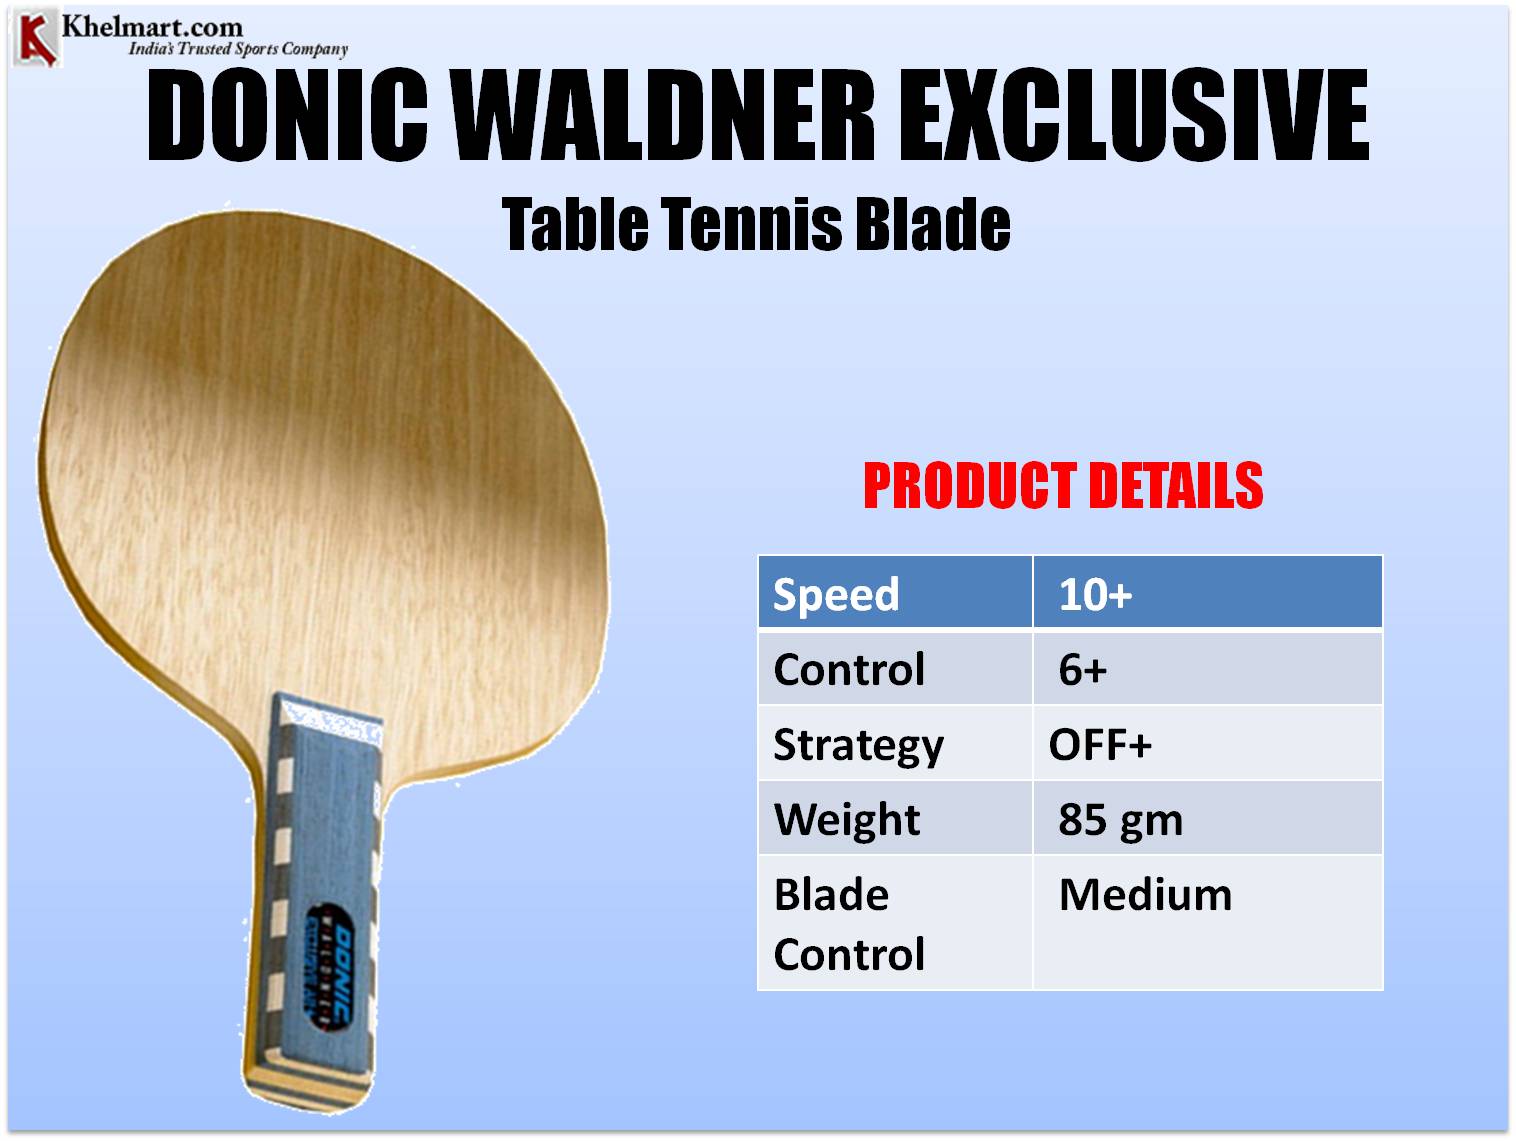 DONIC_WALDNER_EXCLUSIVE_Table_Tennis_Blade.jpg